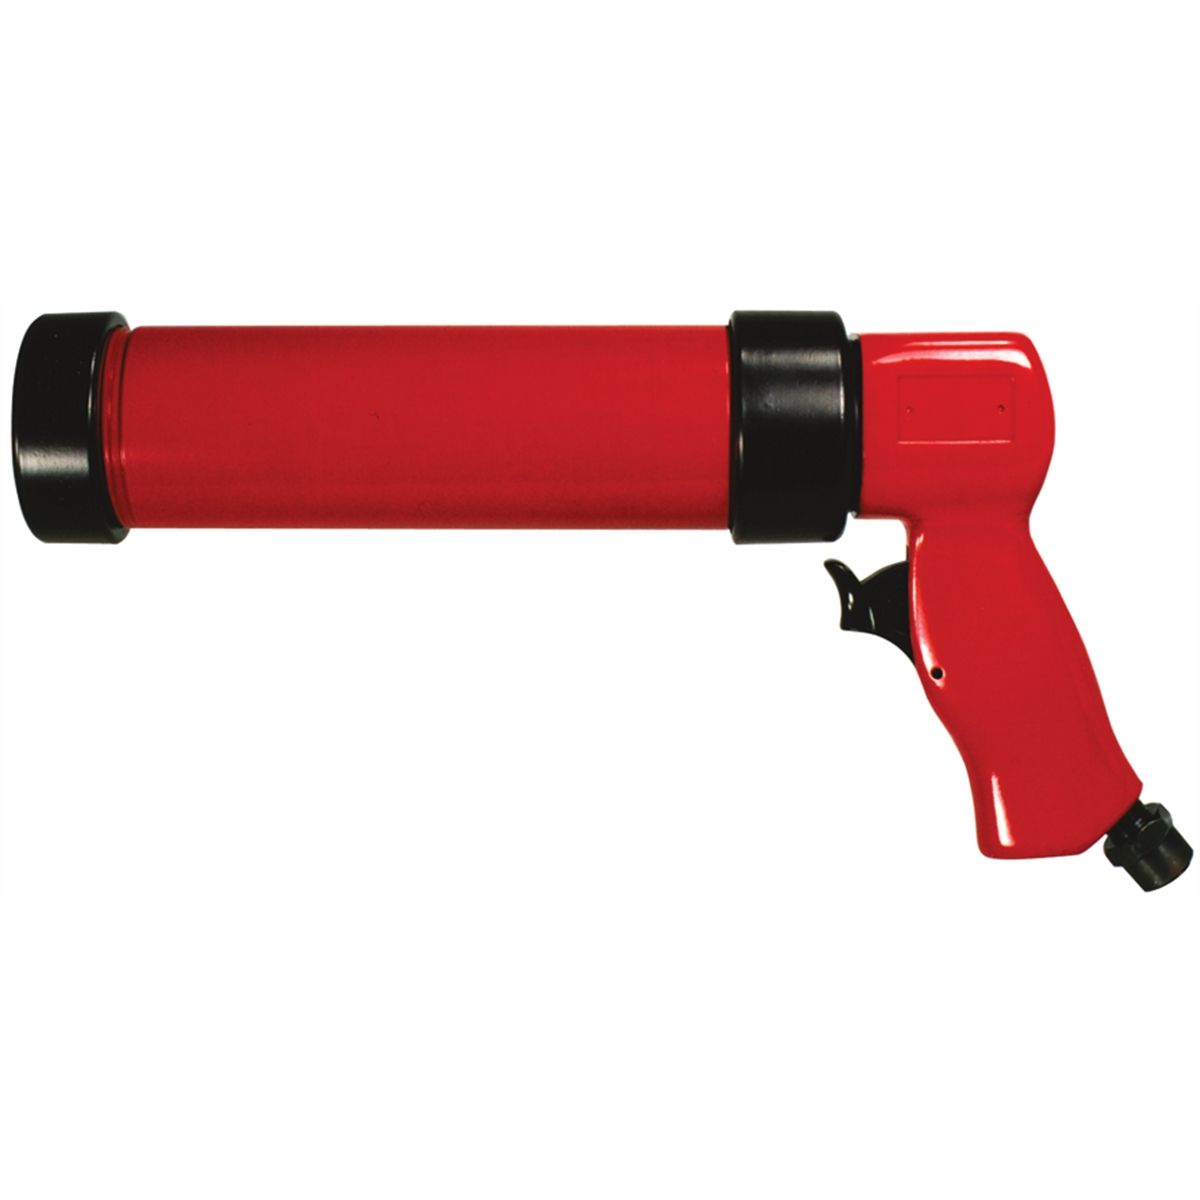 COX 63001 10oz Cartridge Pnuematic Caulk Gun for sale online 